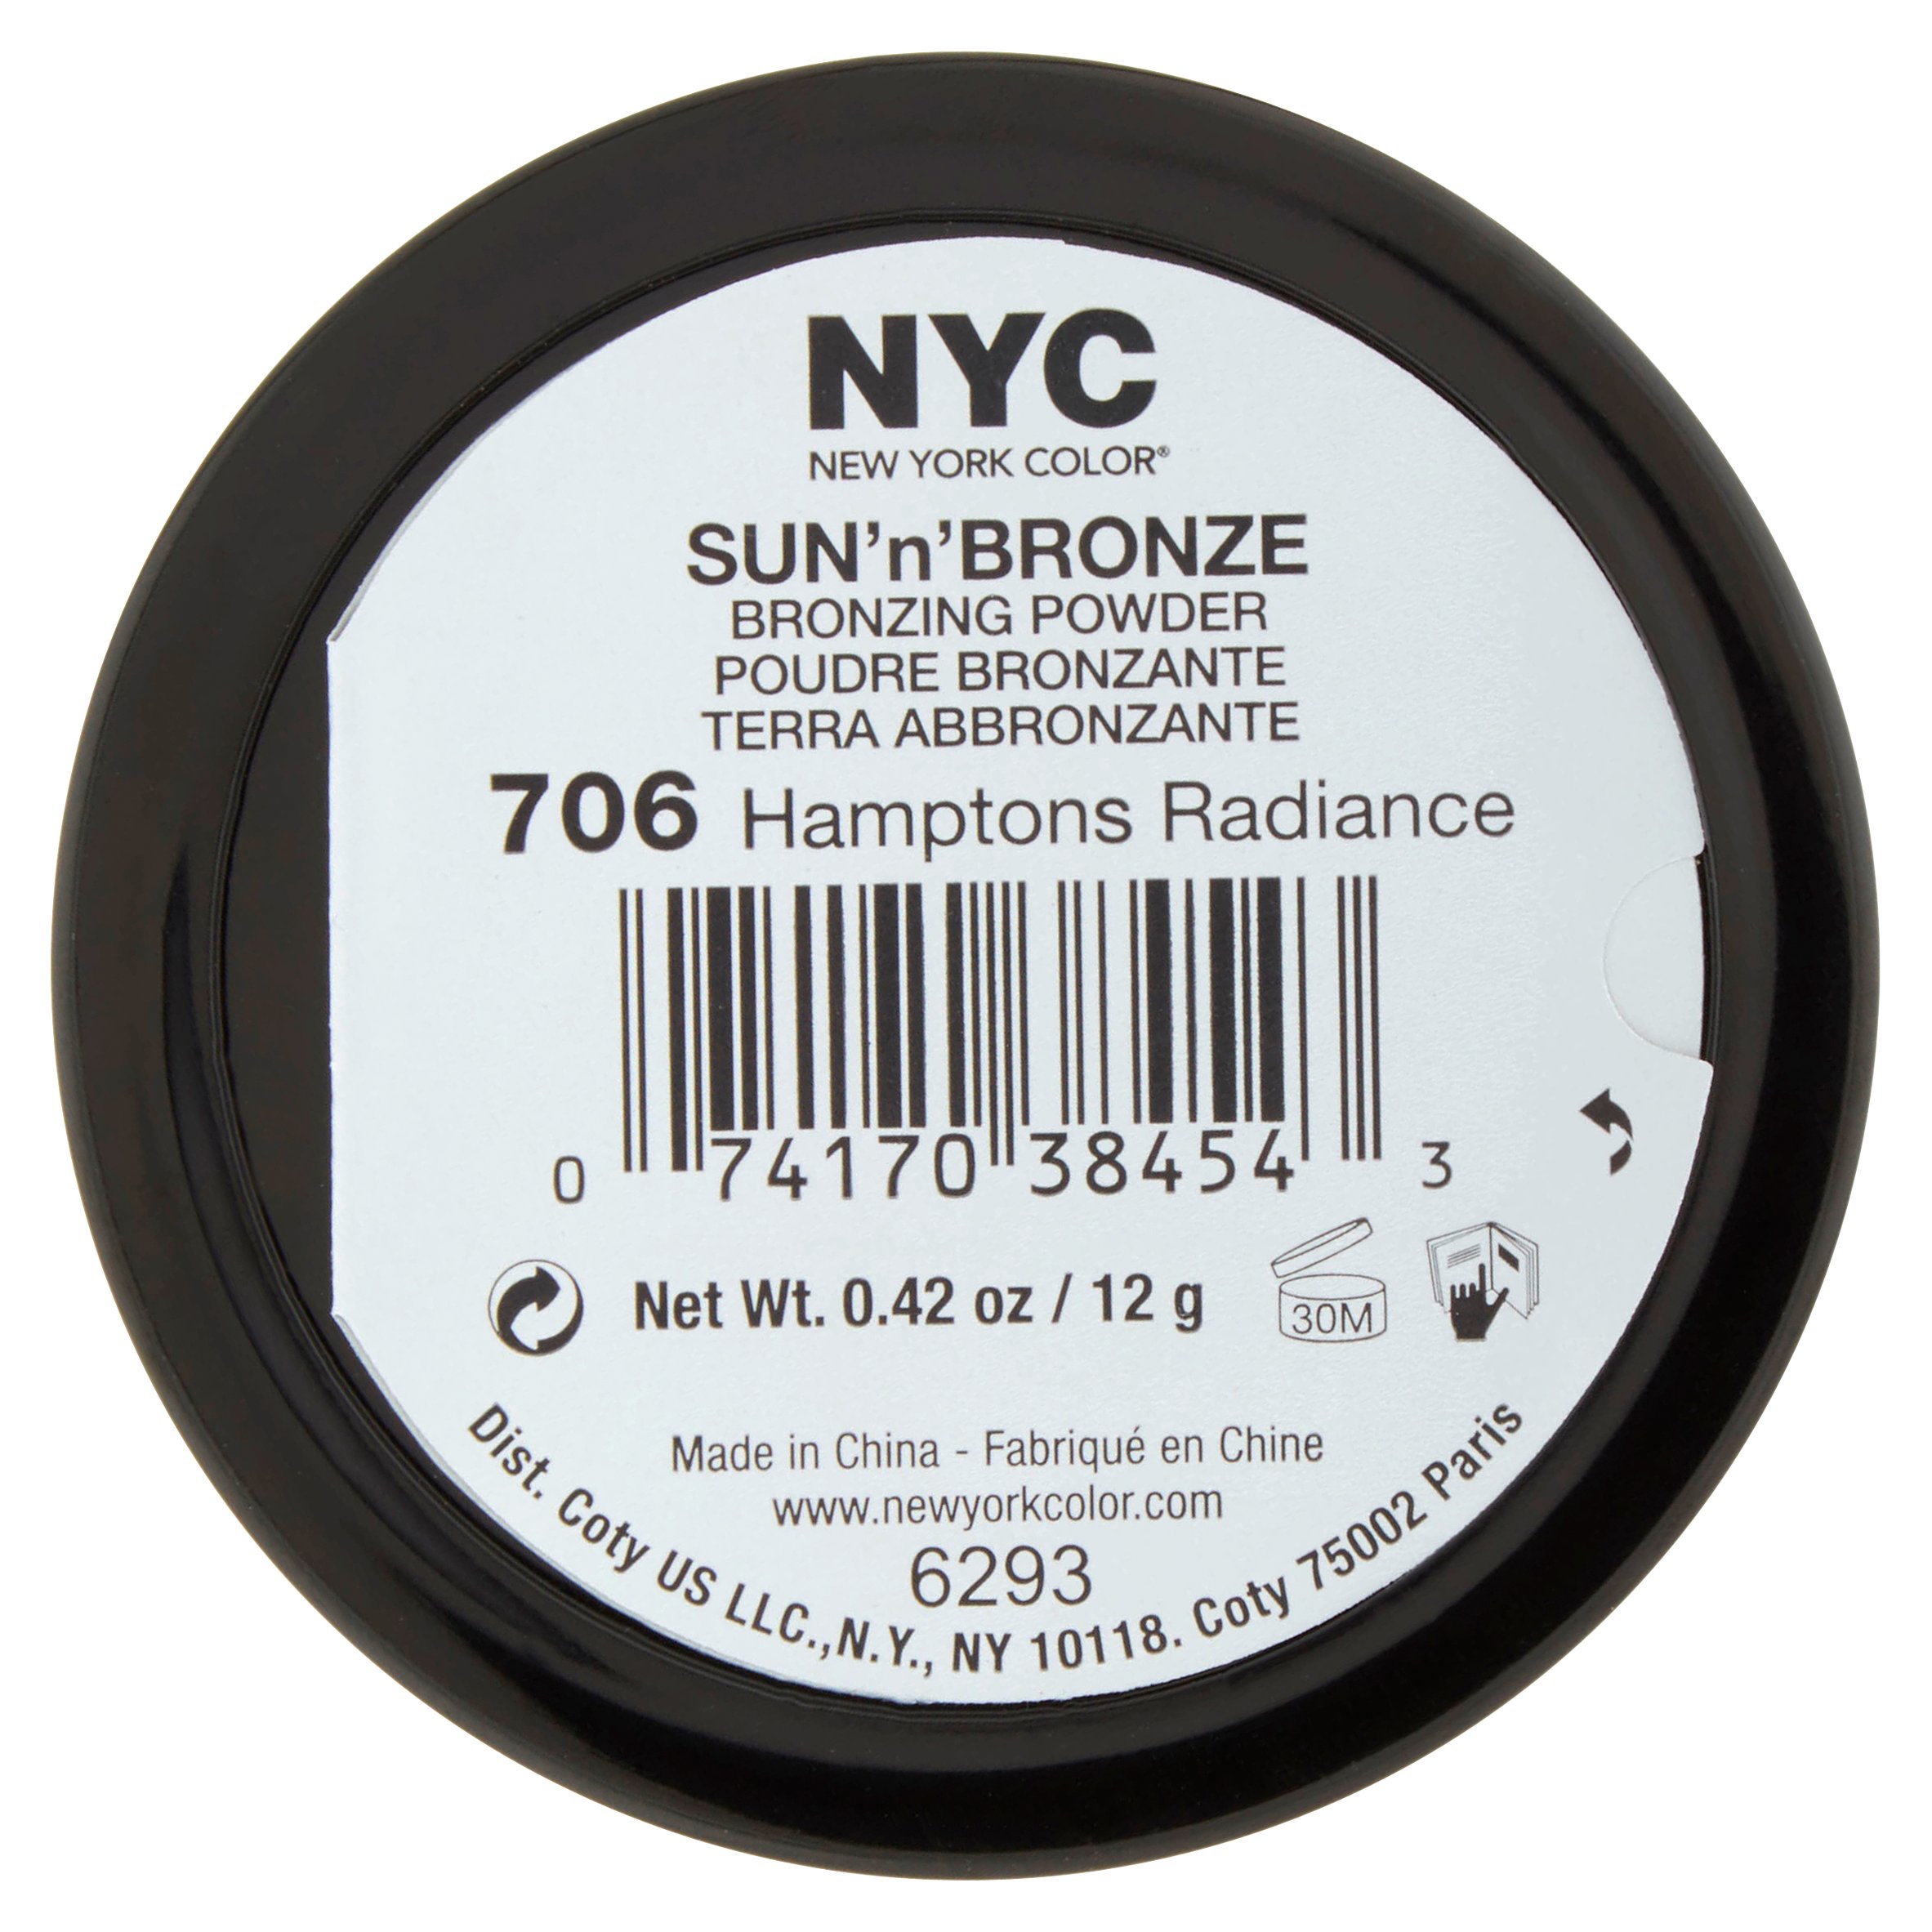 New york color sun 'n' bronze 706 hamptons radiance bronzing powder, 0.42 oz - image 4 of 5